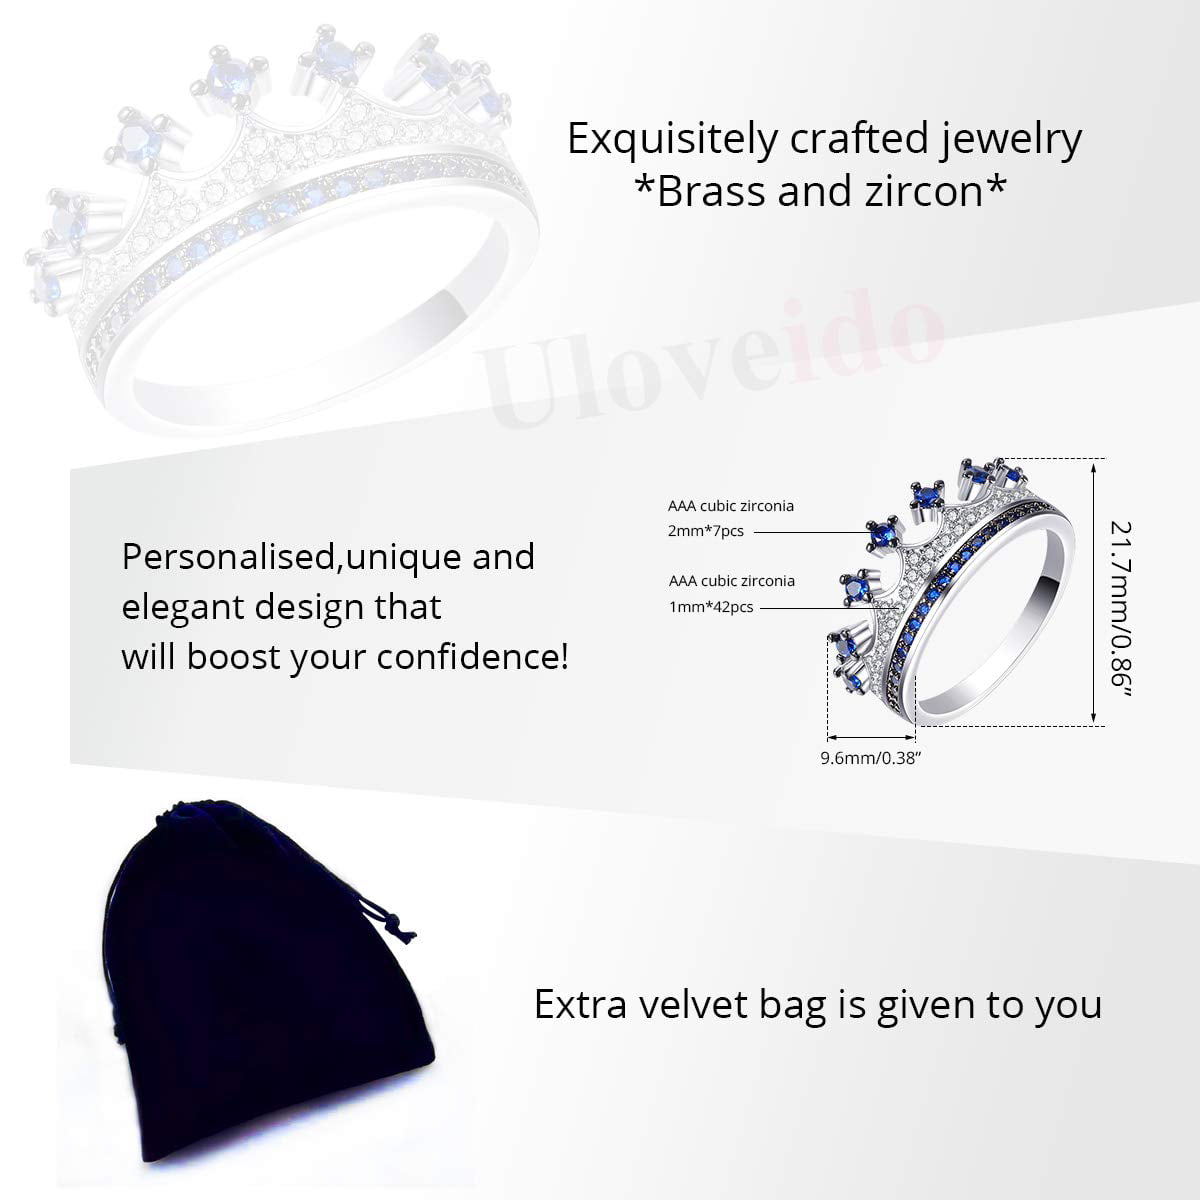 Crown Design Ring | SHEIN USA